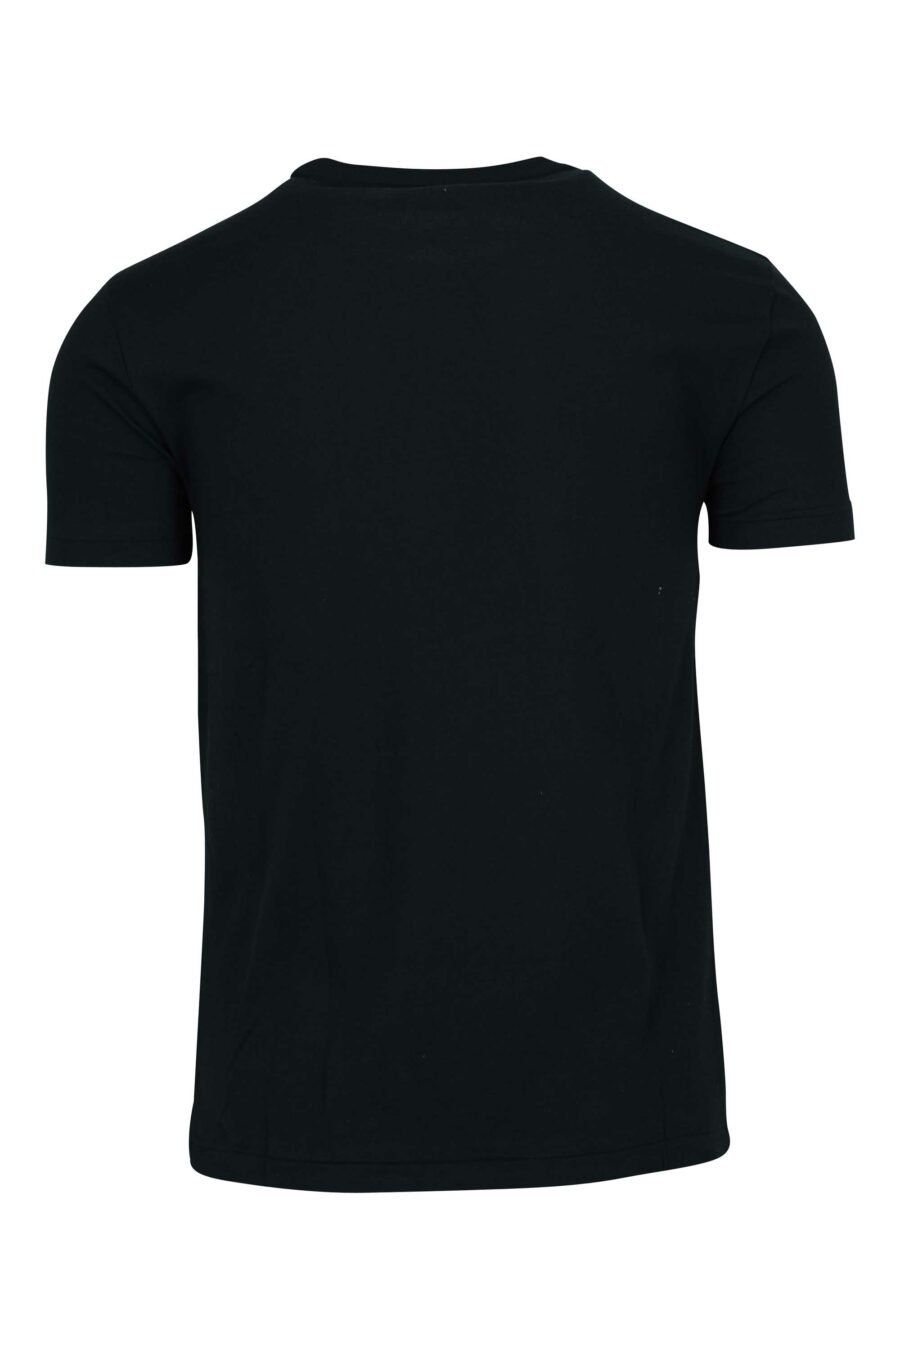 T-shirt noir avec mini-logo "polo" - 5045018254620 1